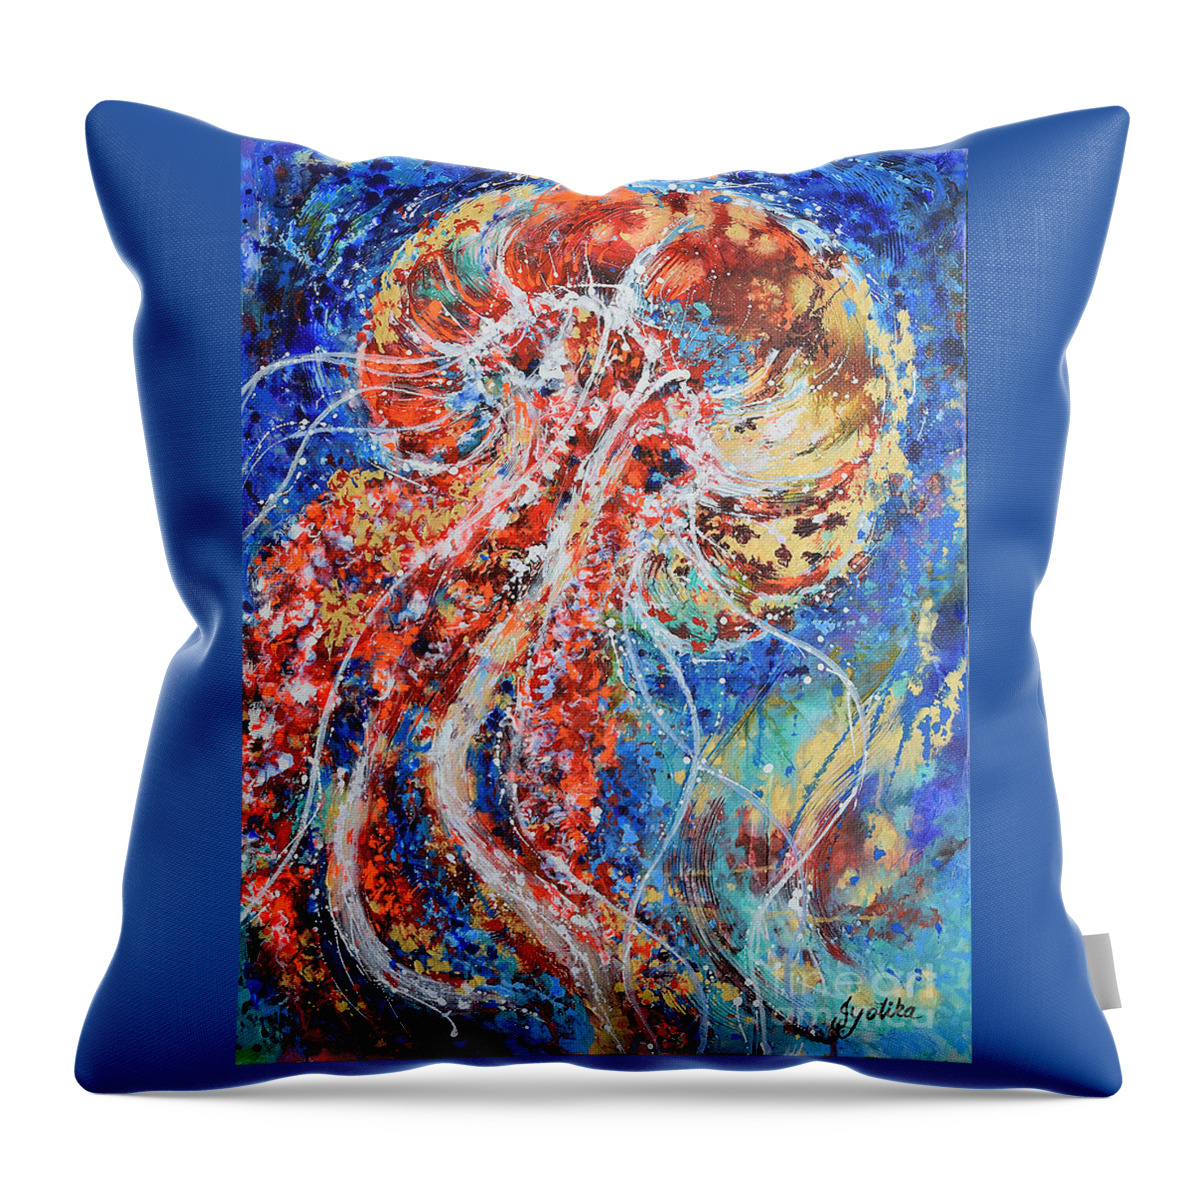 Jellyfish Throw Pillow featuring the painting Joyous Jellyfish by Jyotika Shroff